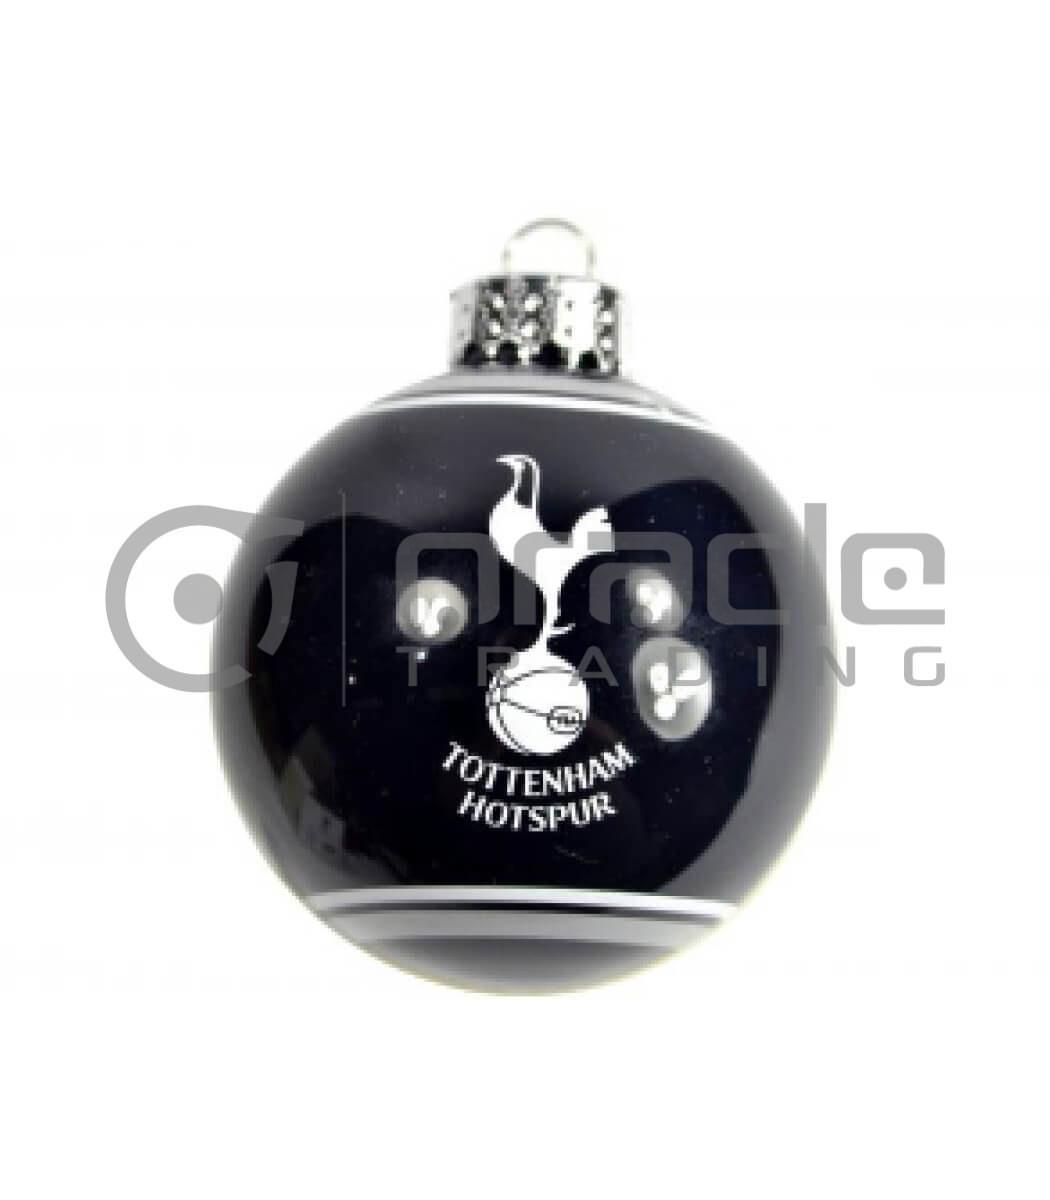 Tottenham Christmas Ornament